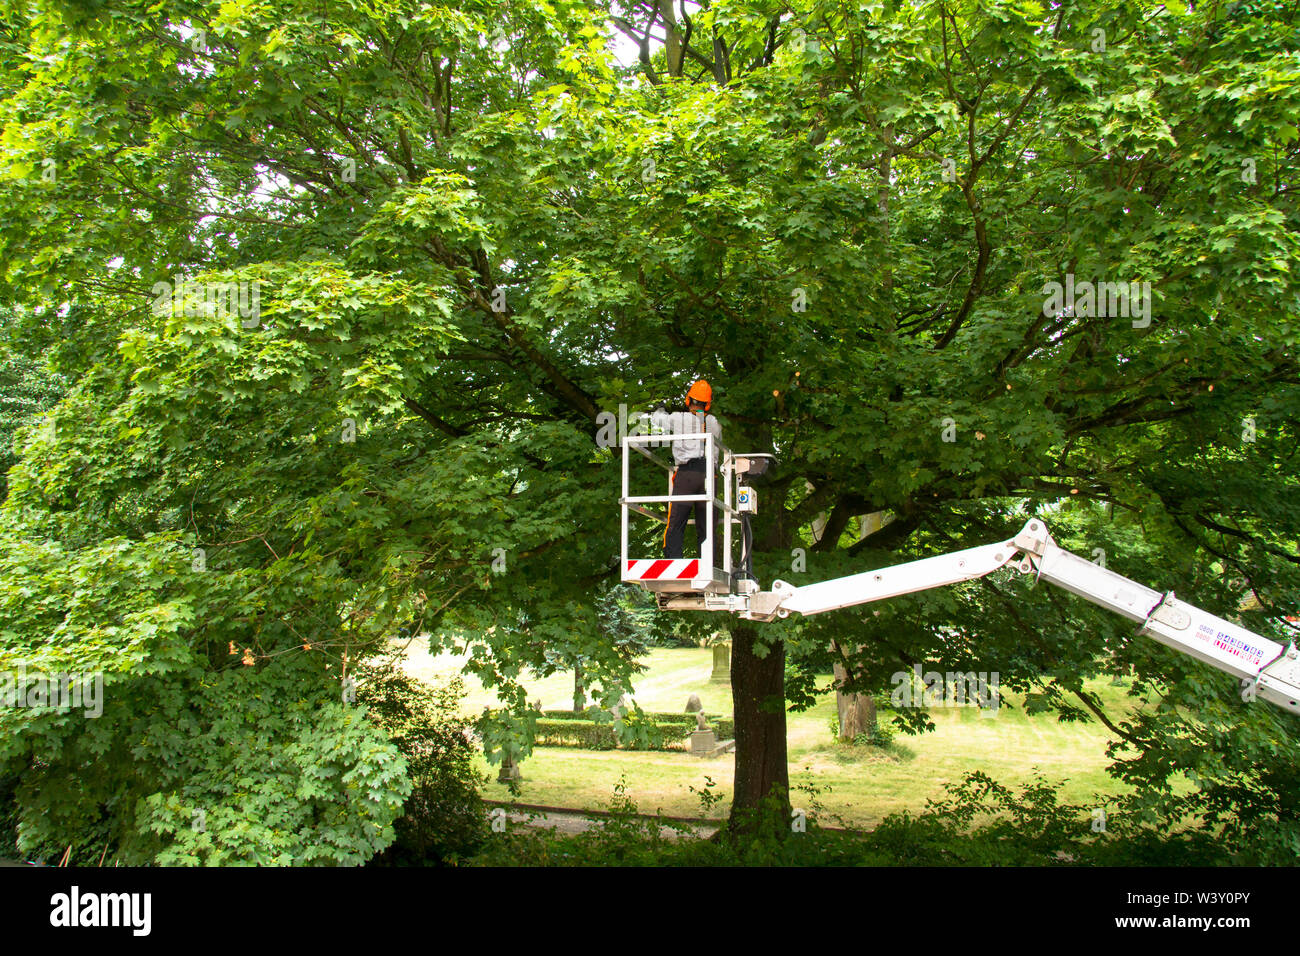 Tree care service sur un érable à Wetter an der Ruhr, Allemagne. Un Baumpflegearbeiten einem Ahorn dans Wetter an der Ruhr, Deutschland. Banque D'Images